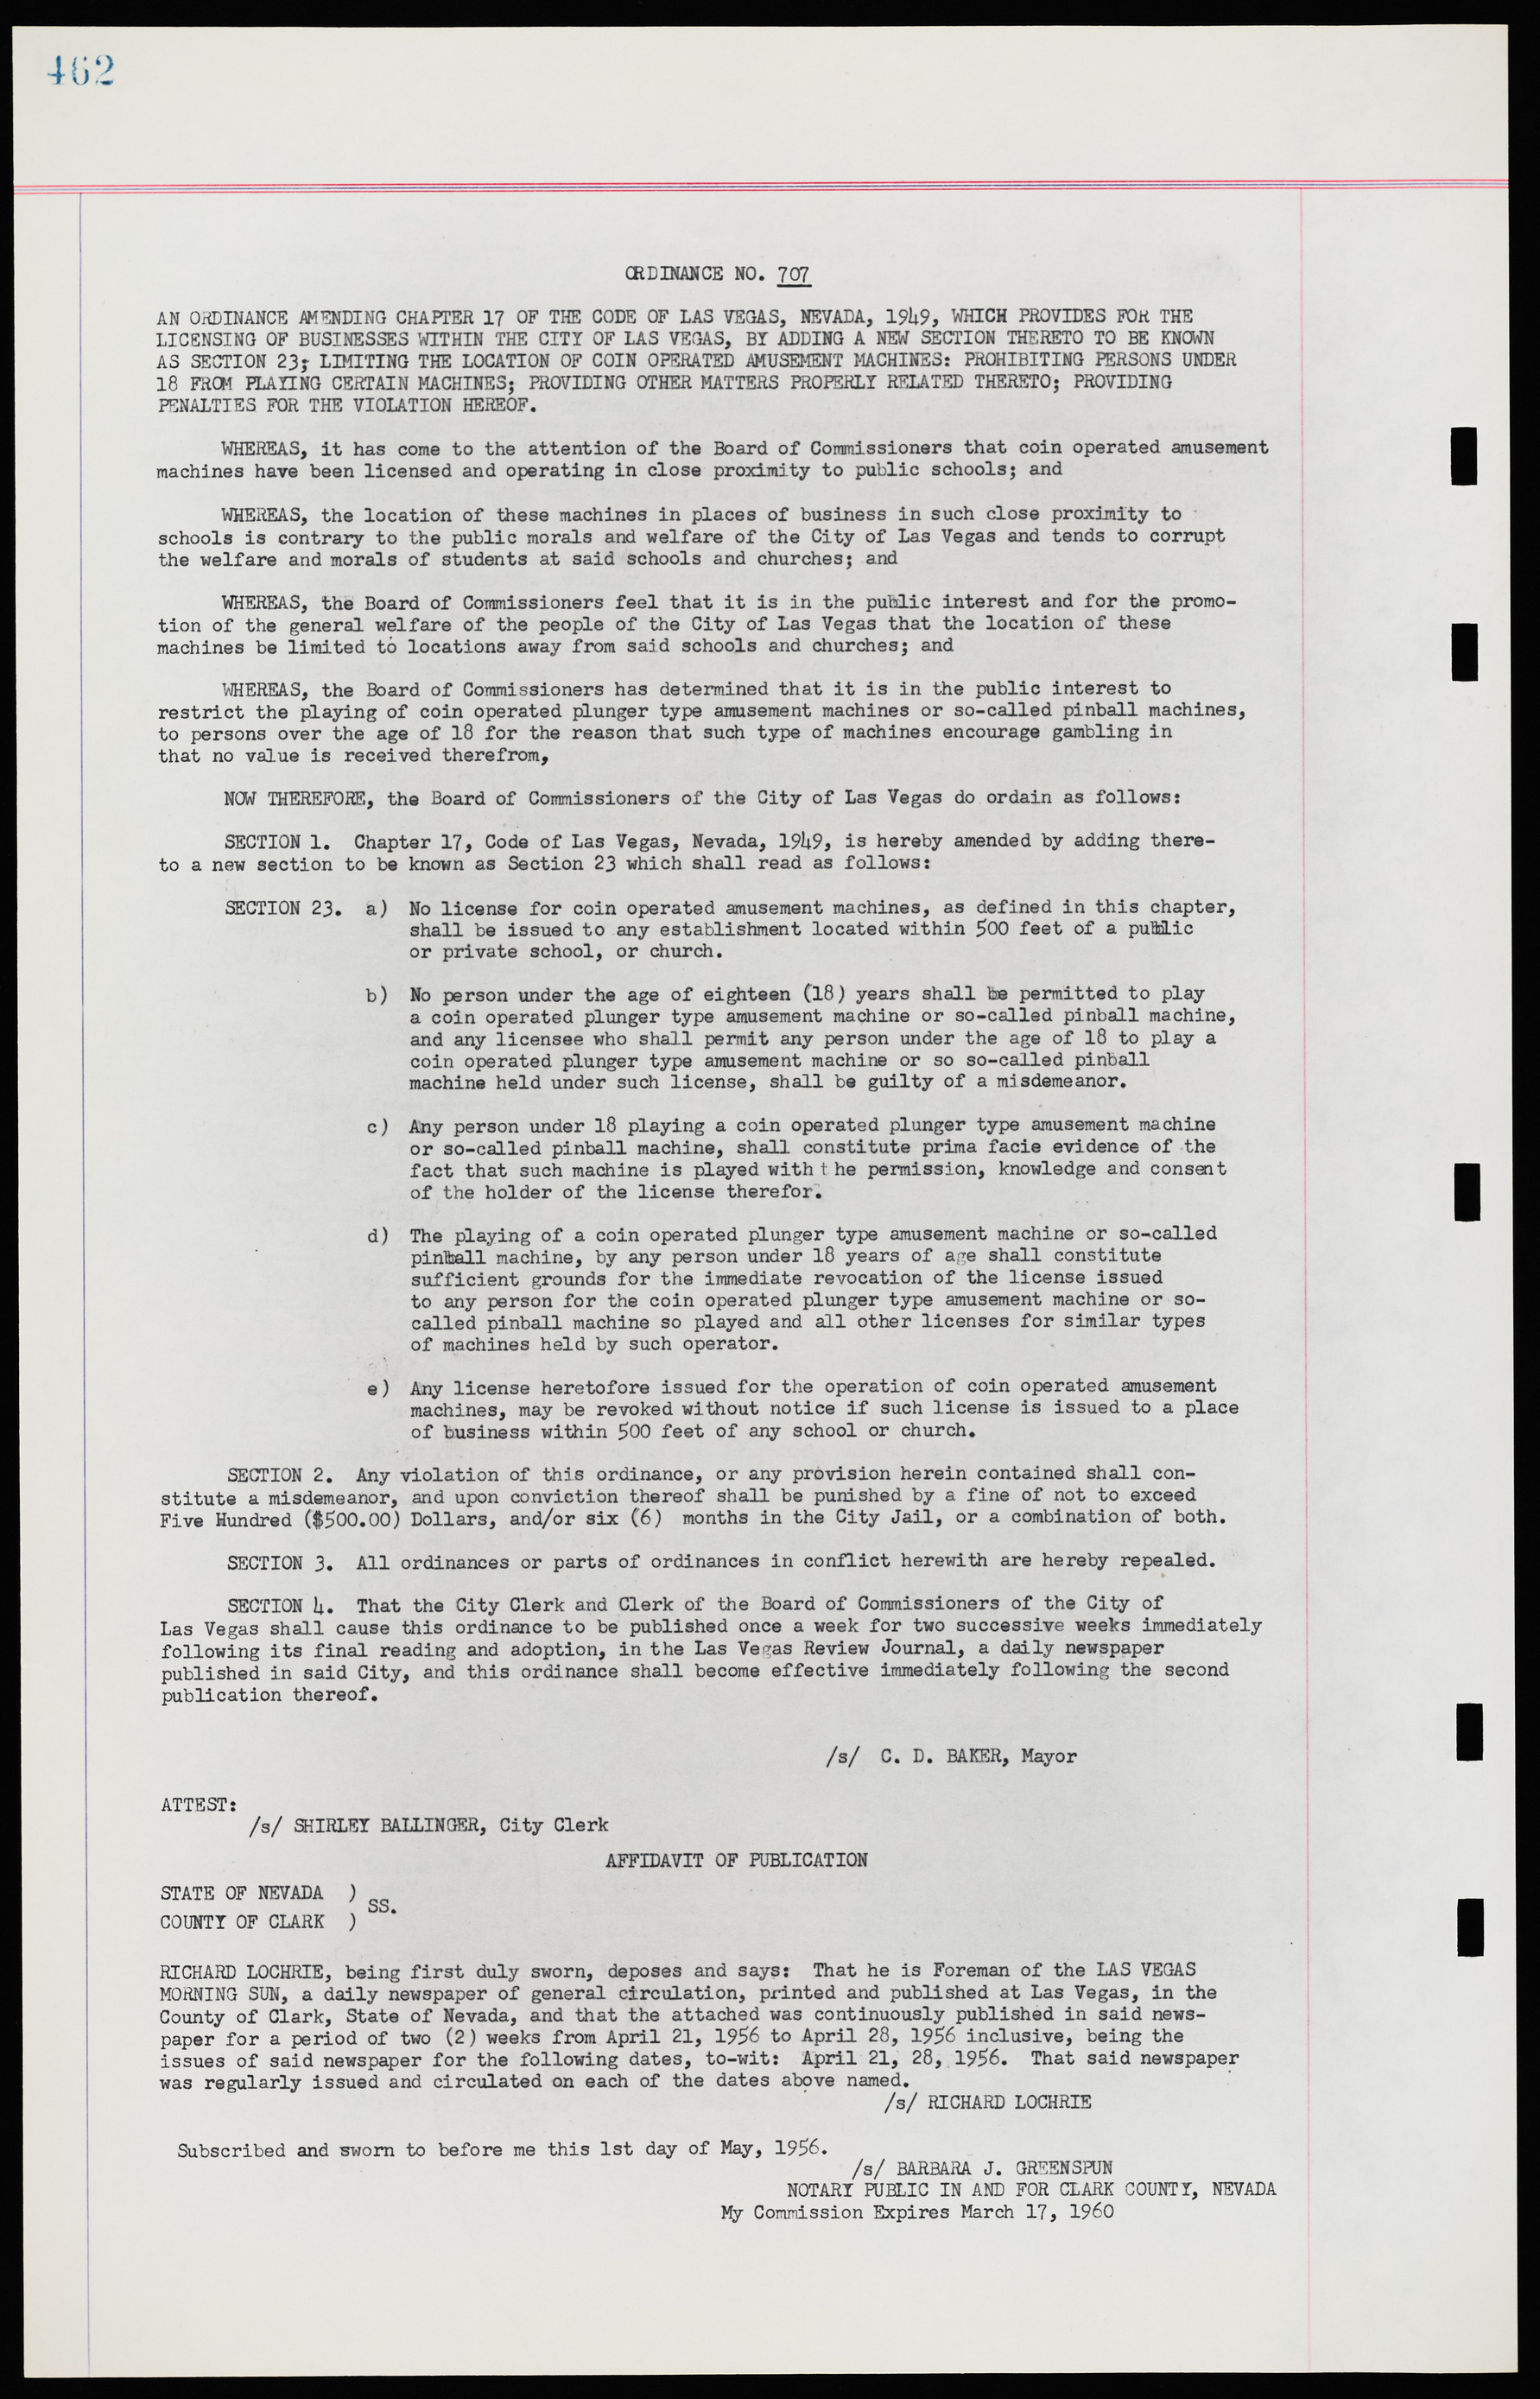 Las Vegas City Ordinances, November 13, 1950 to August 6, 1958, lvc000015-470